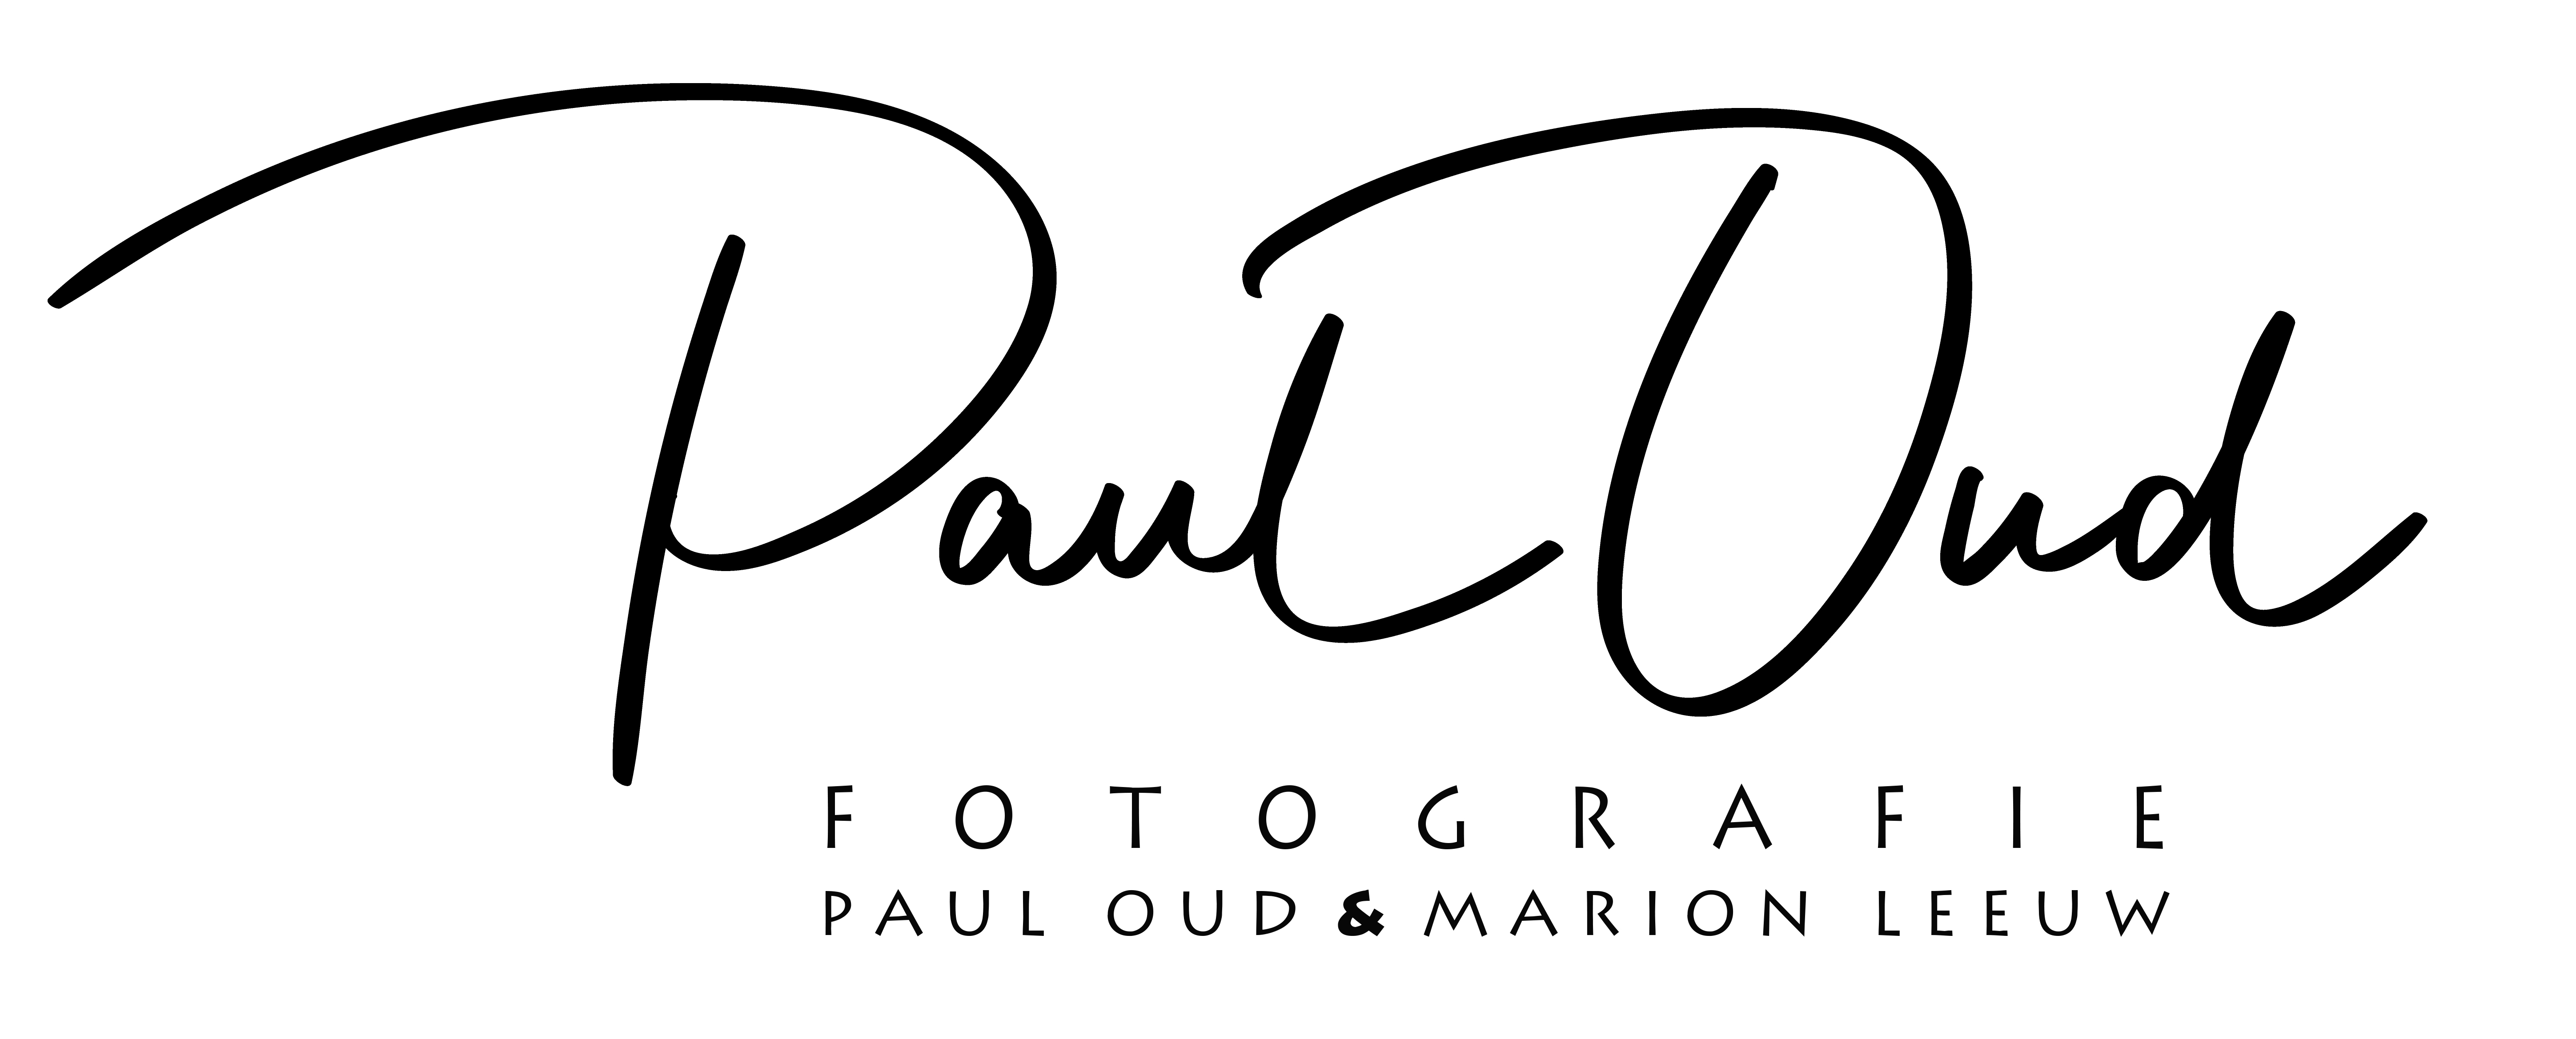 Paul Oud Fotografie - Prijzen Fotoshoots